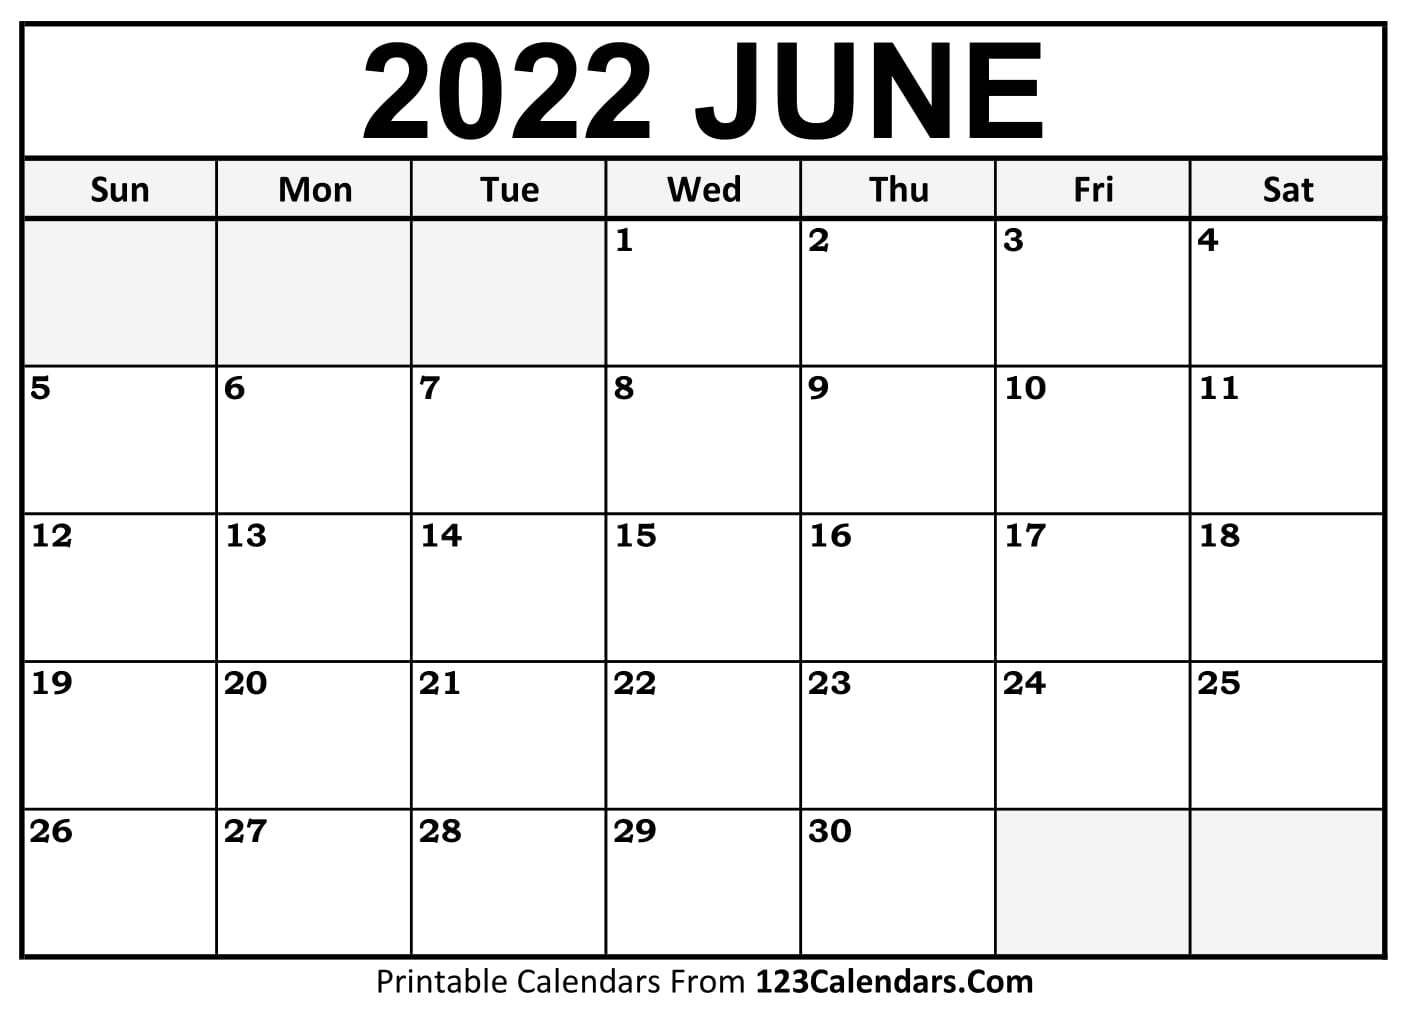 Month Of June 2022 Calendar Printable June 2022 Calendar Templates - 123Calendars.com